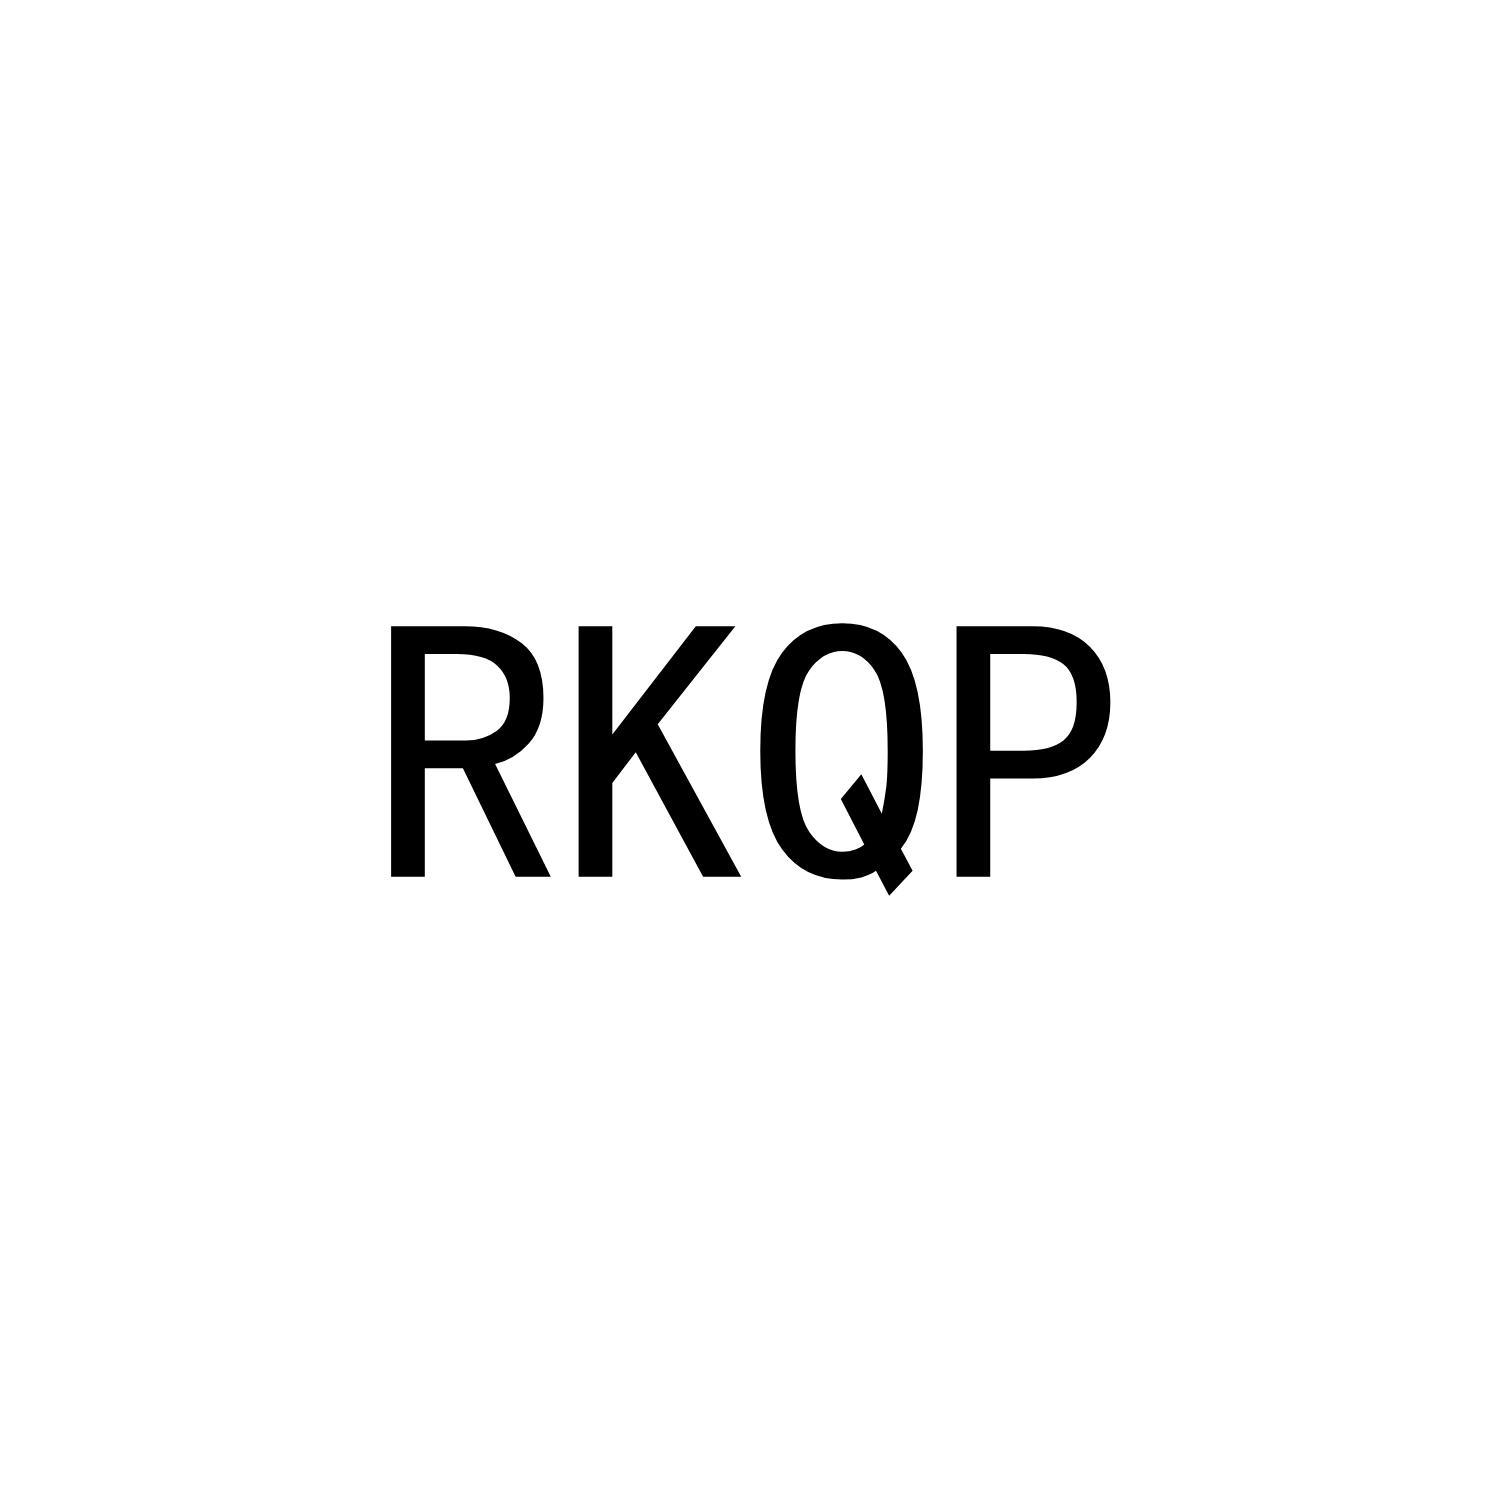 RKQP